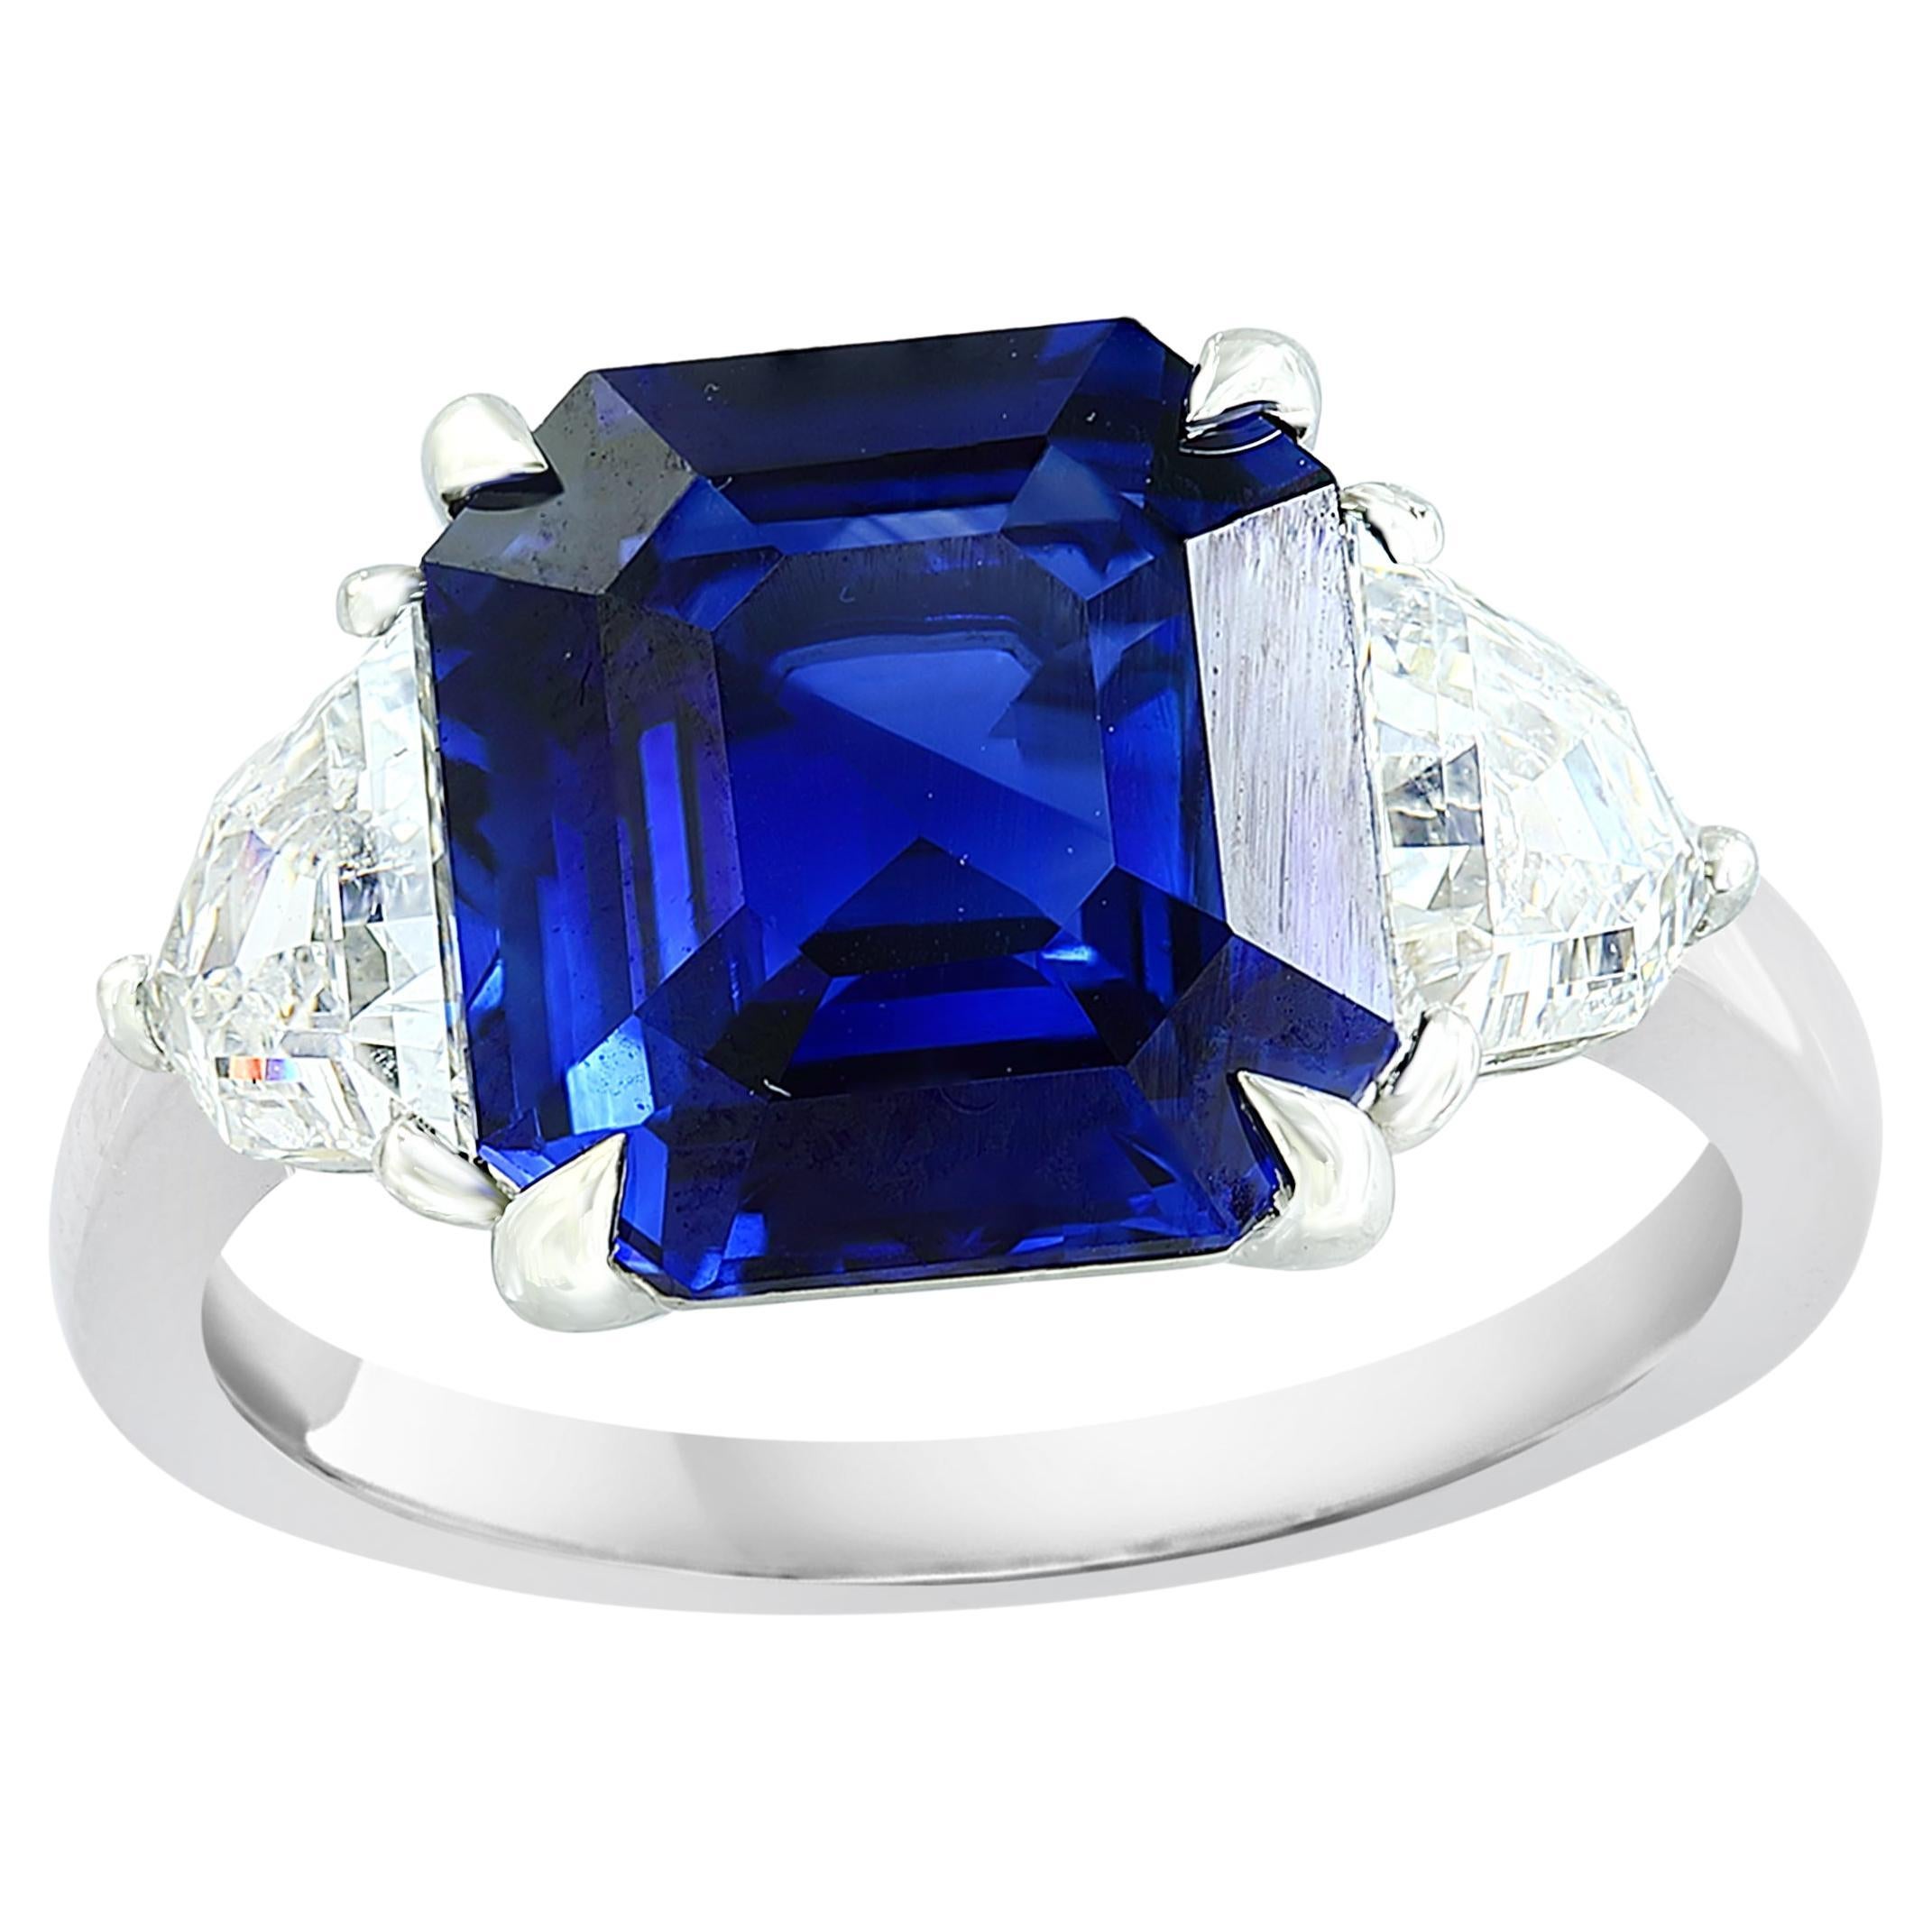 Certified 3.58 Carat Emerald Cut Sapphire & Diamond Engagement Ring in Platinum